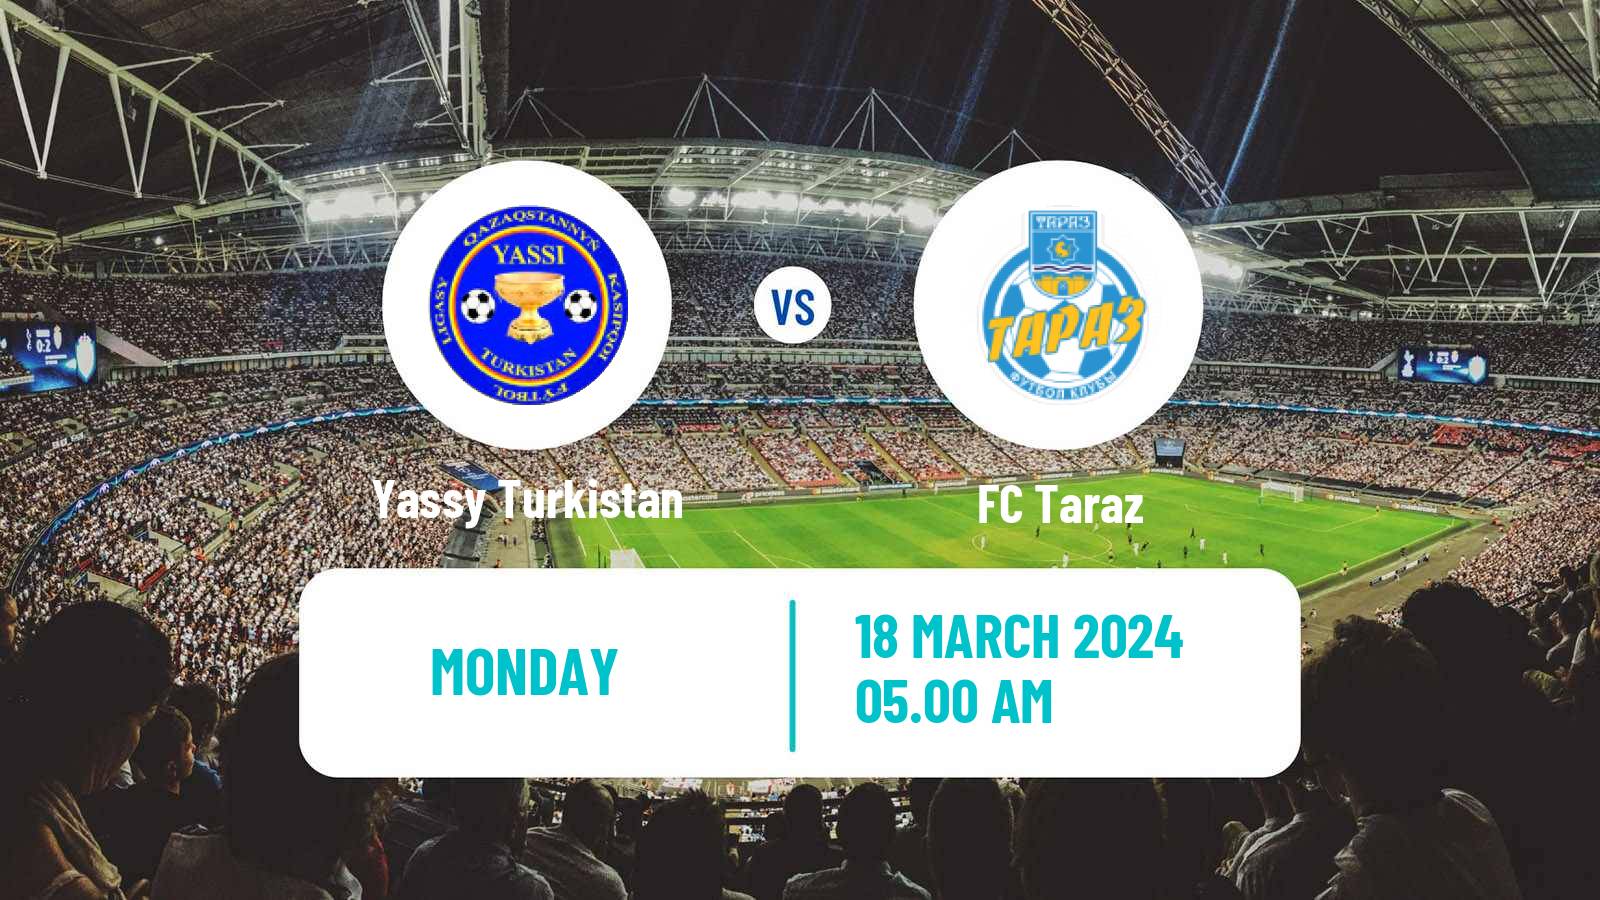 Soccer Kazakh Cup Yassy Turkistan - Taraz